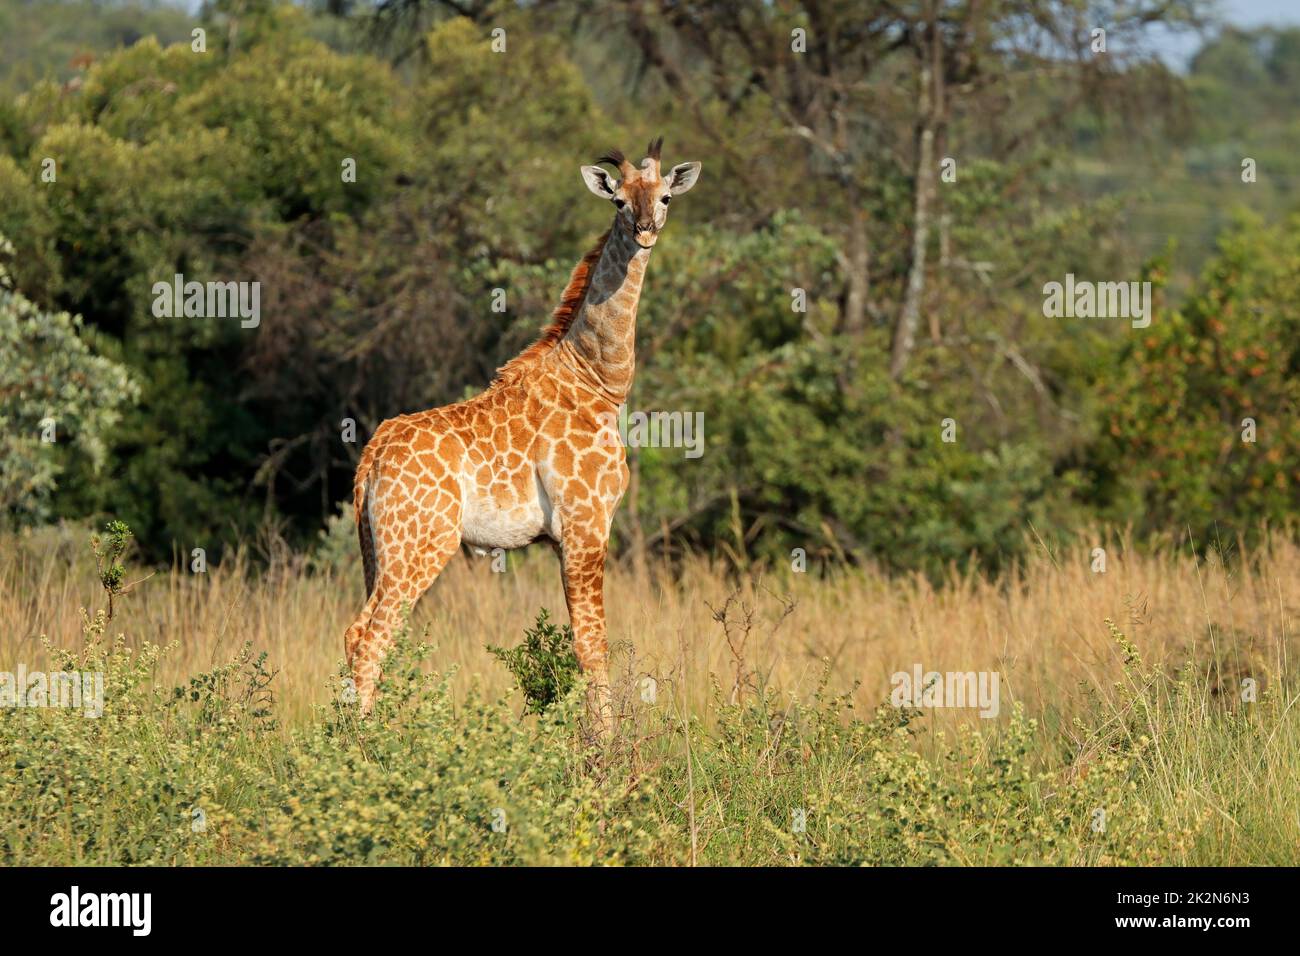 Young giraffe in natural habitat Stock Photo